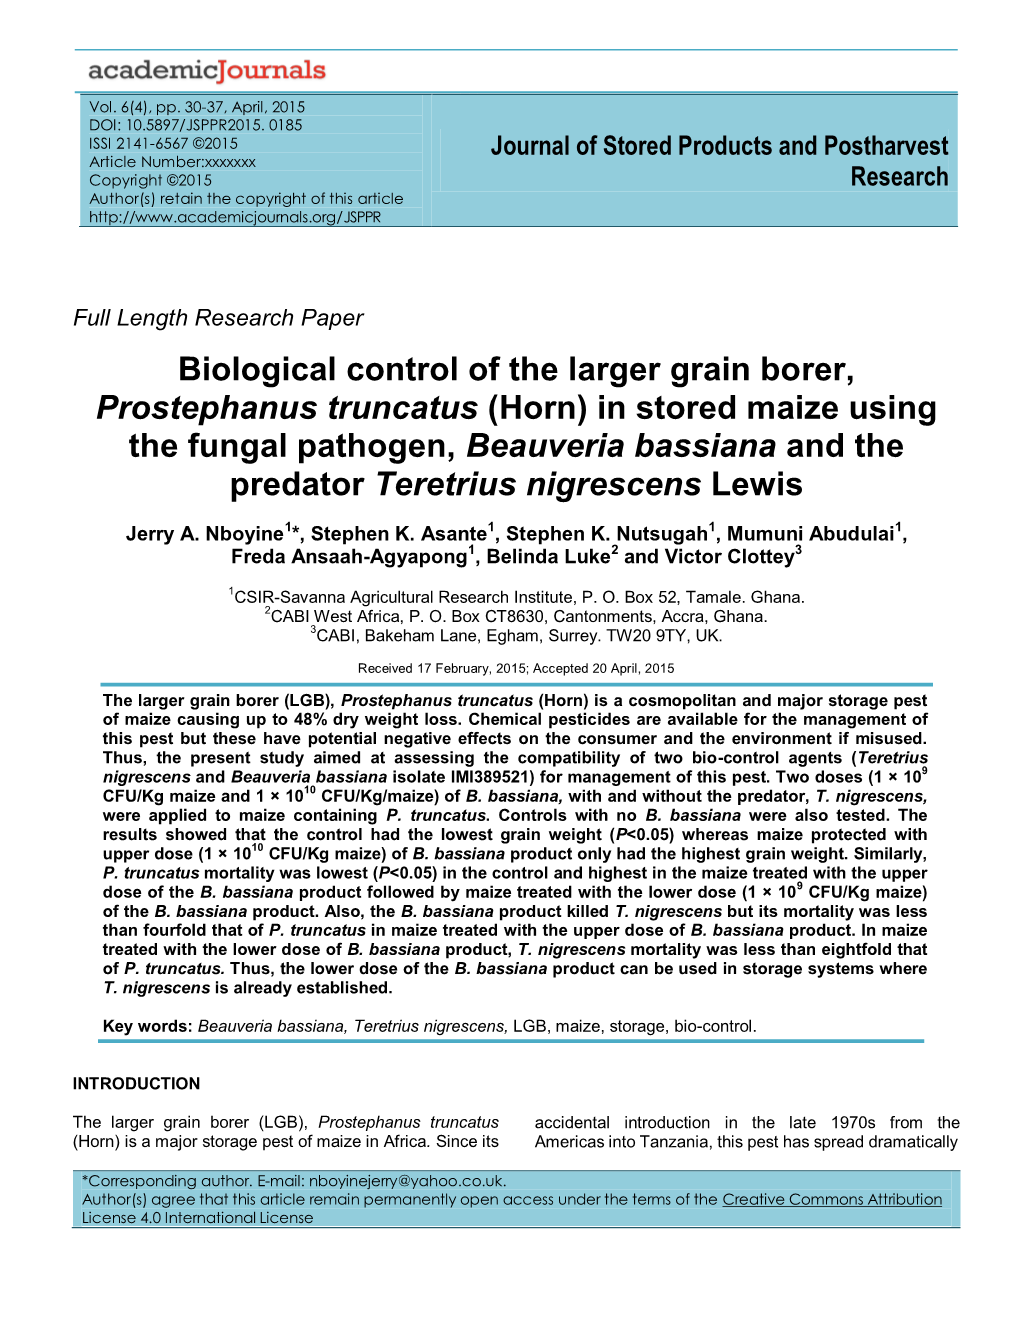 Biological Control of the Larger Grain Borer